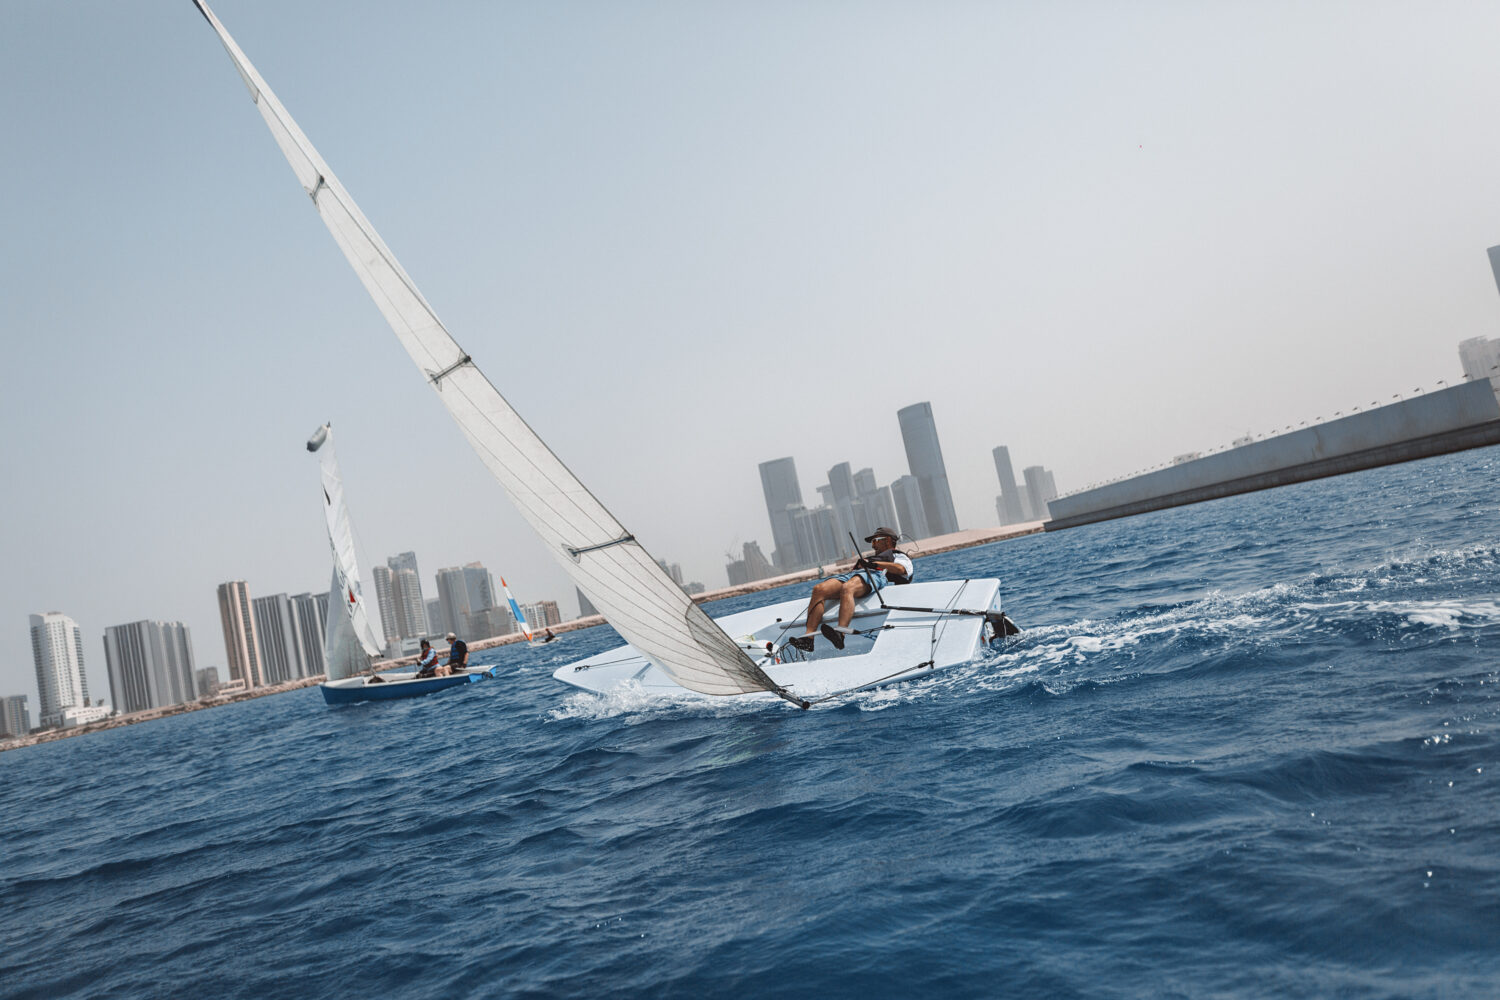 Abu Dhabi Sailing Academy